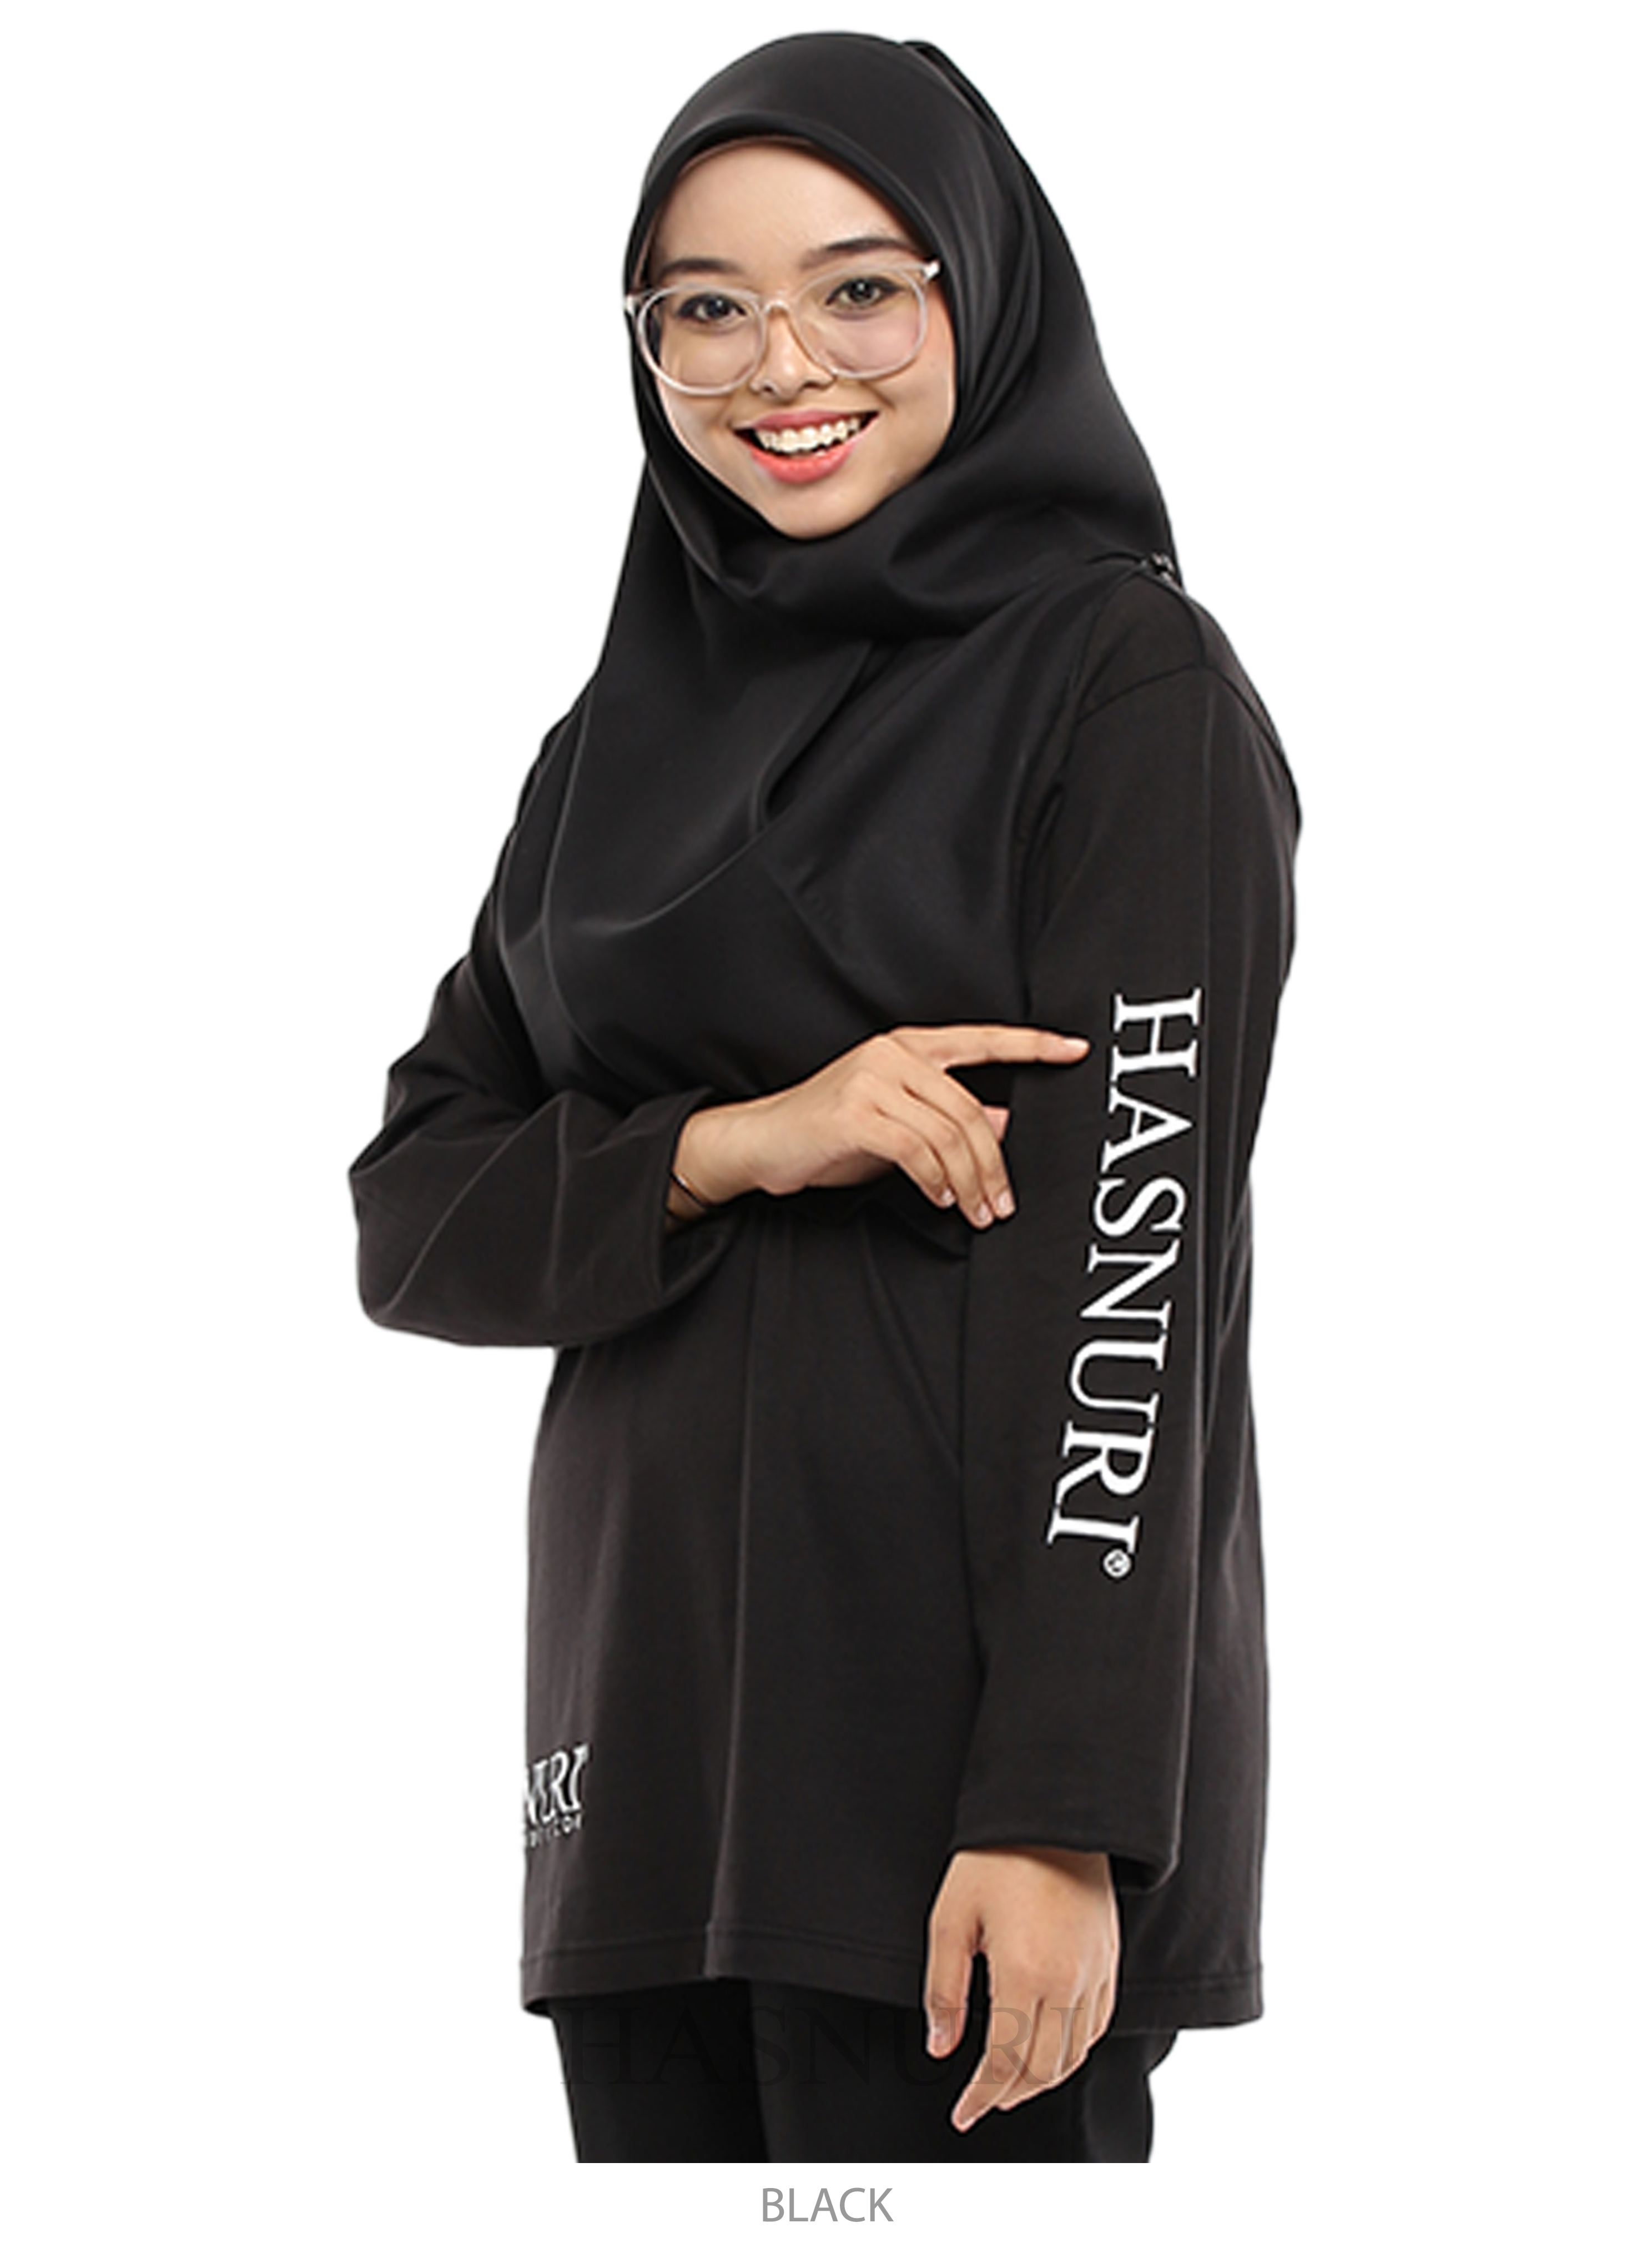 T-shirt Hasnuri Women - Black&w=300&zc=1